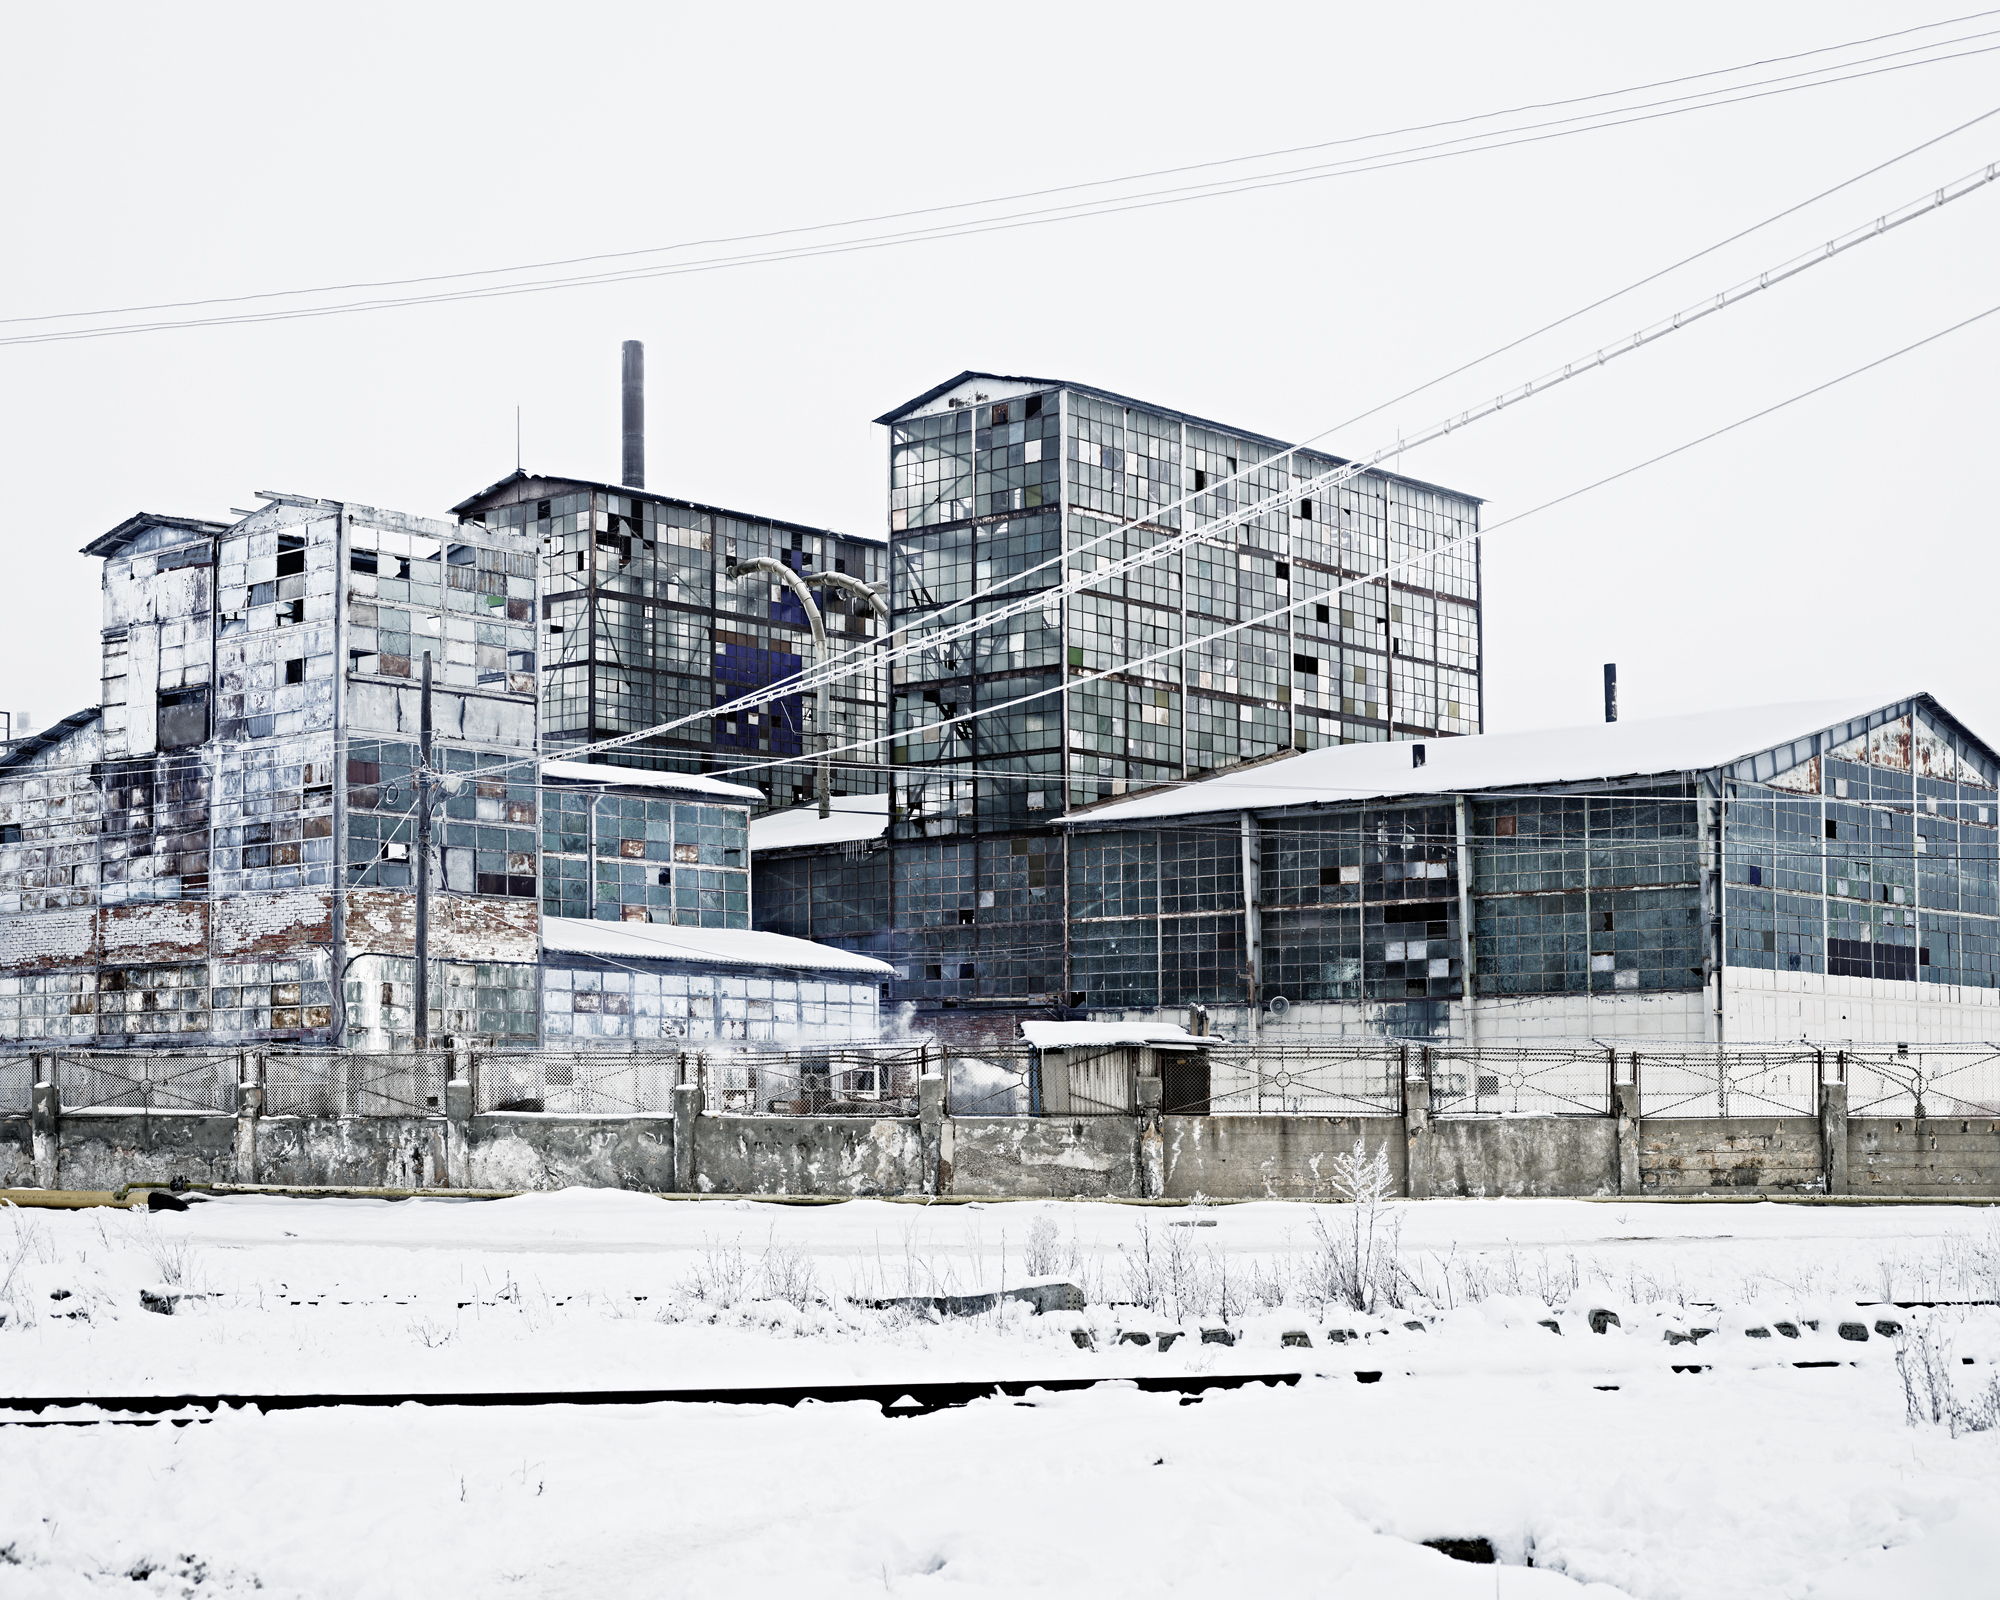 Sodium Factory (Ocna-Mures, Central Romania), 2012